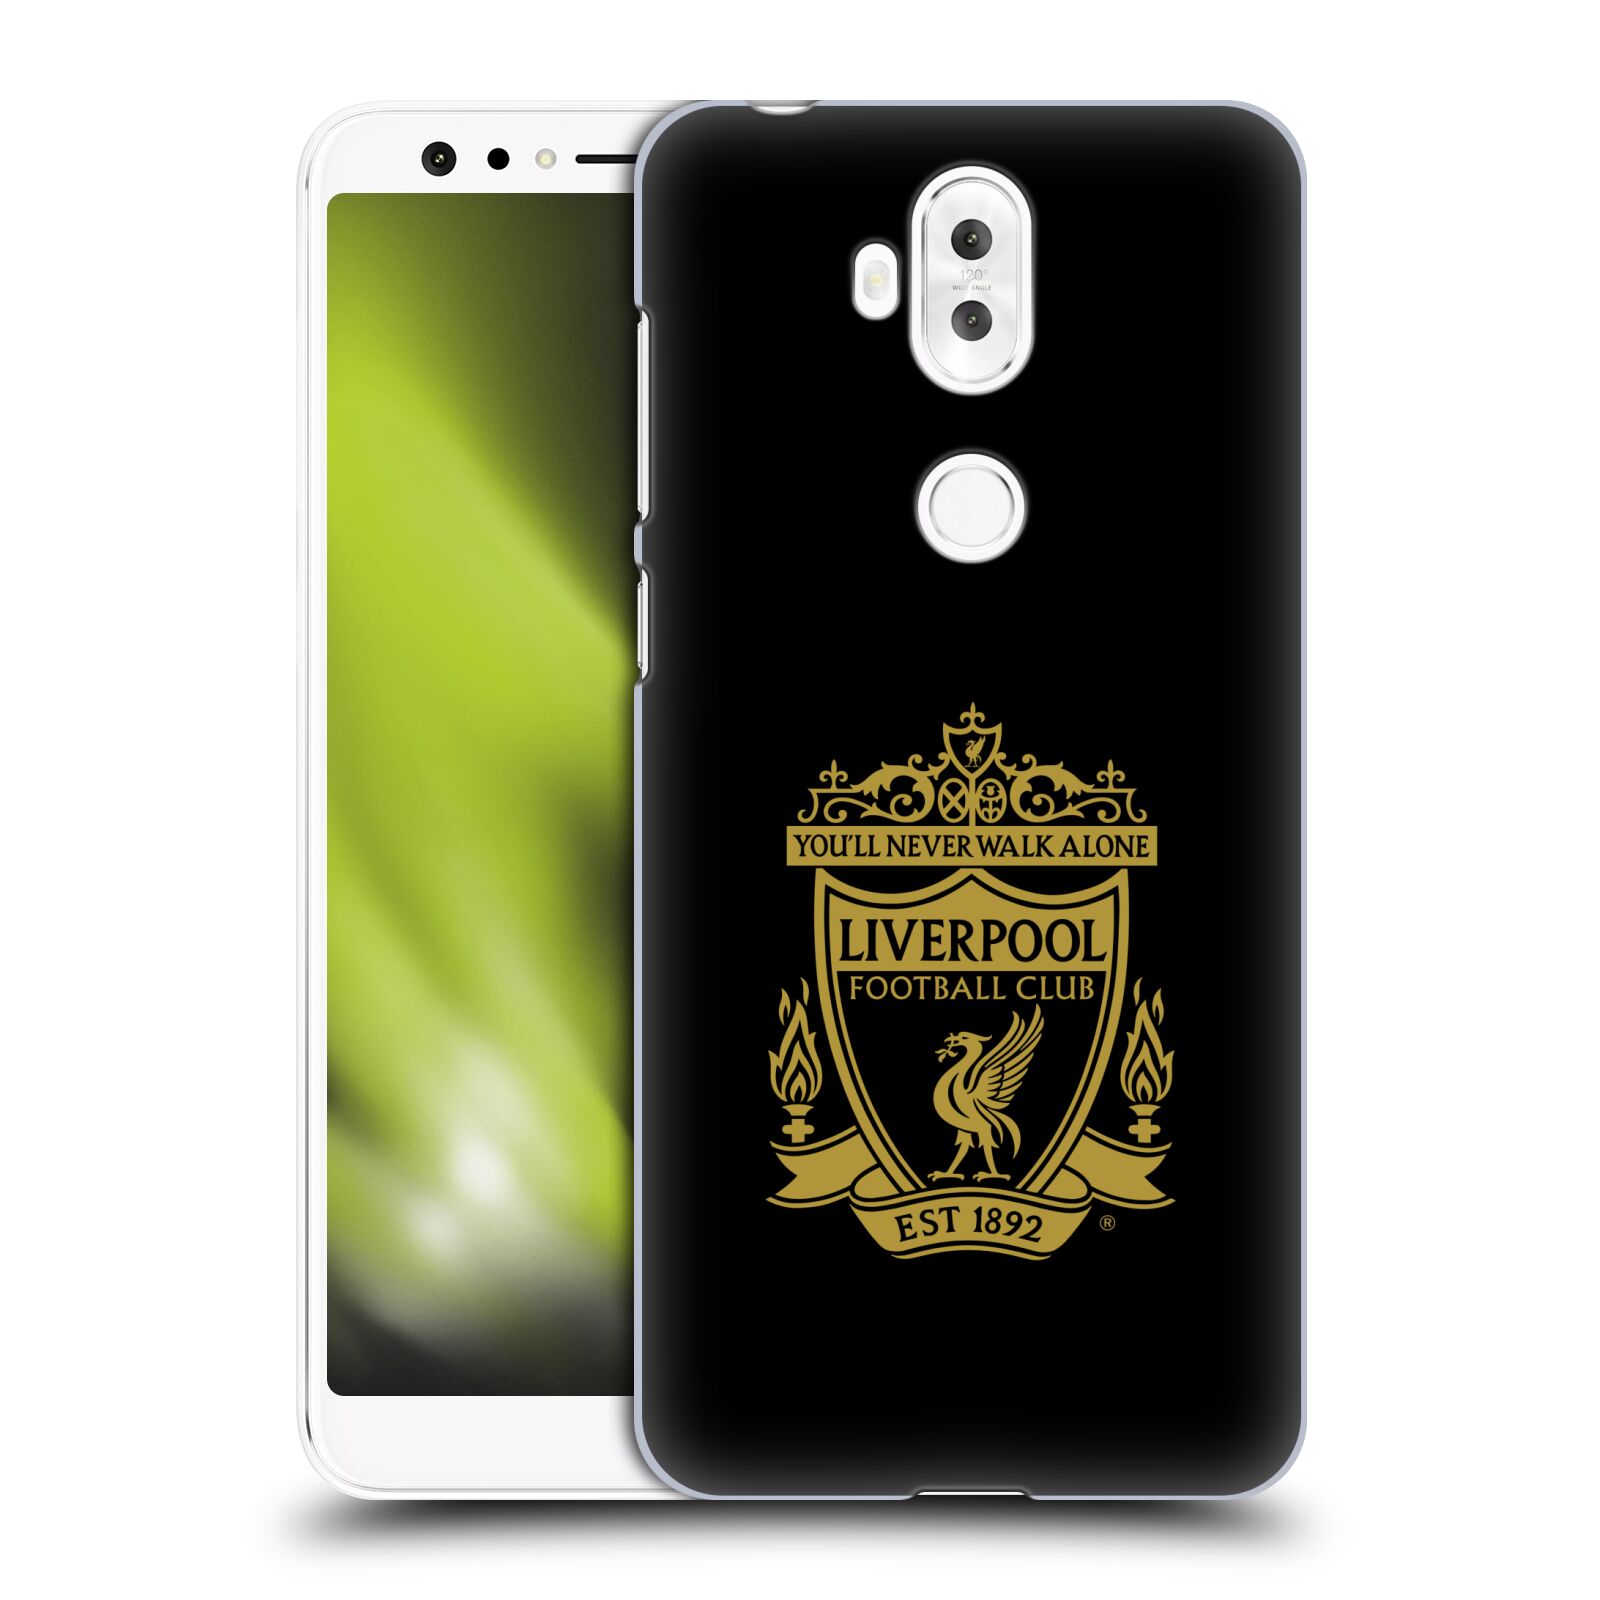 HEAD CASE plastový obal na mobil Asus Zenfone 5 LITE ZC600KL Fotbalový klub Liverpool barevný znak červené pozadí